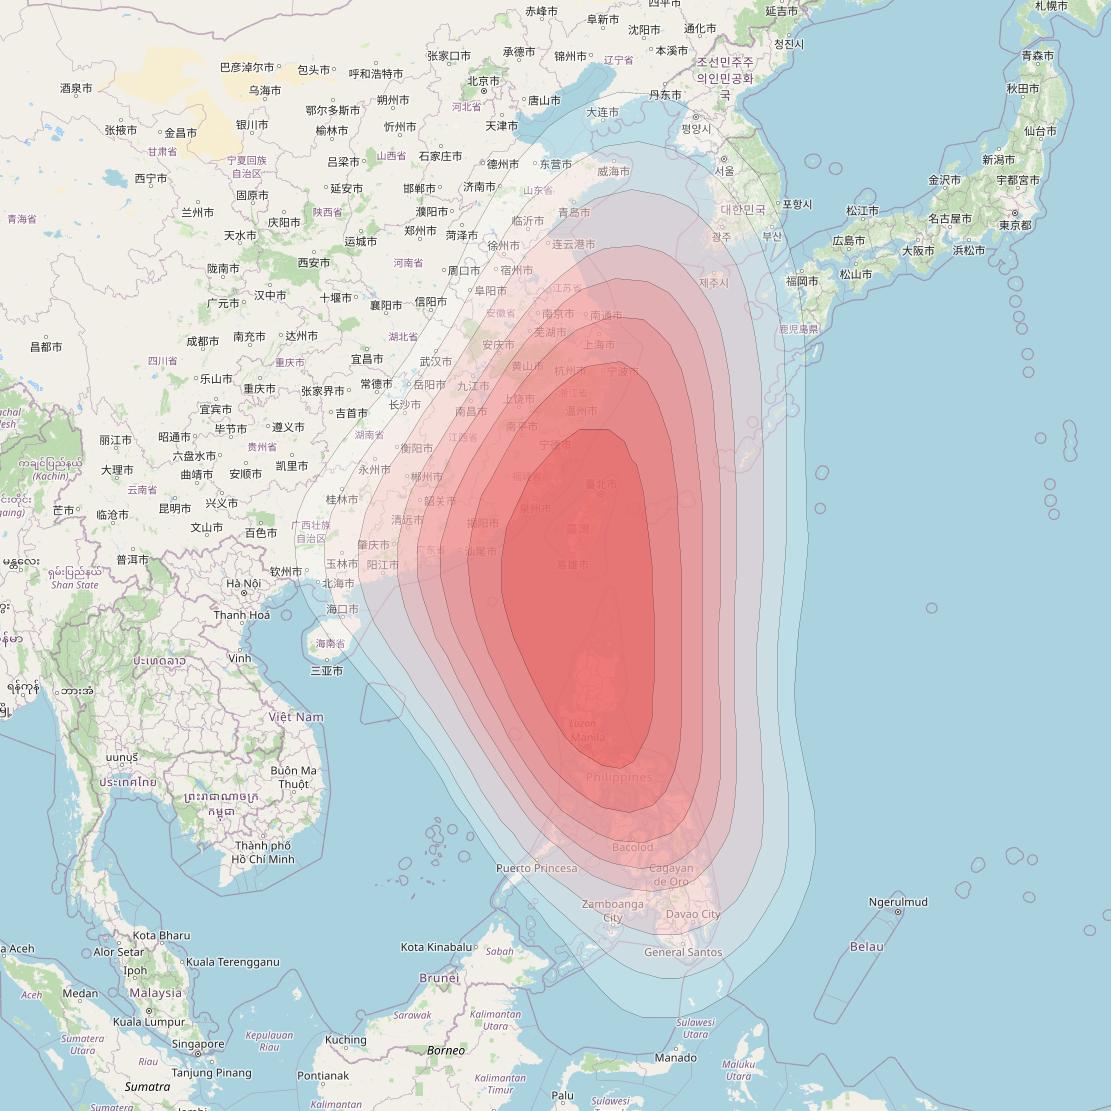 SES 7 at 108° E downlink Ku-Band North East Asia Beam coverage map